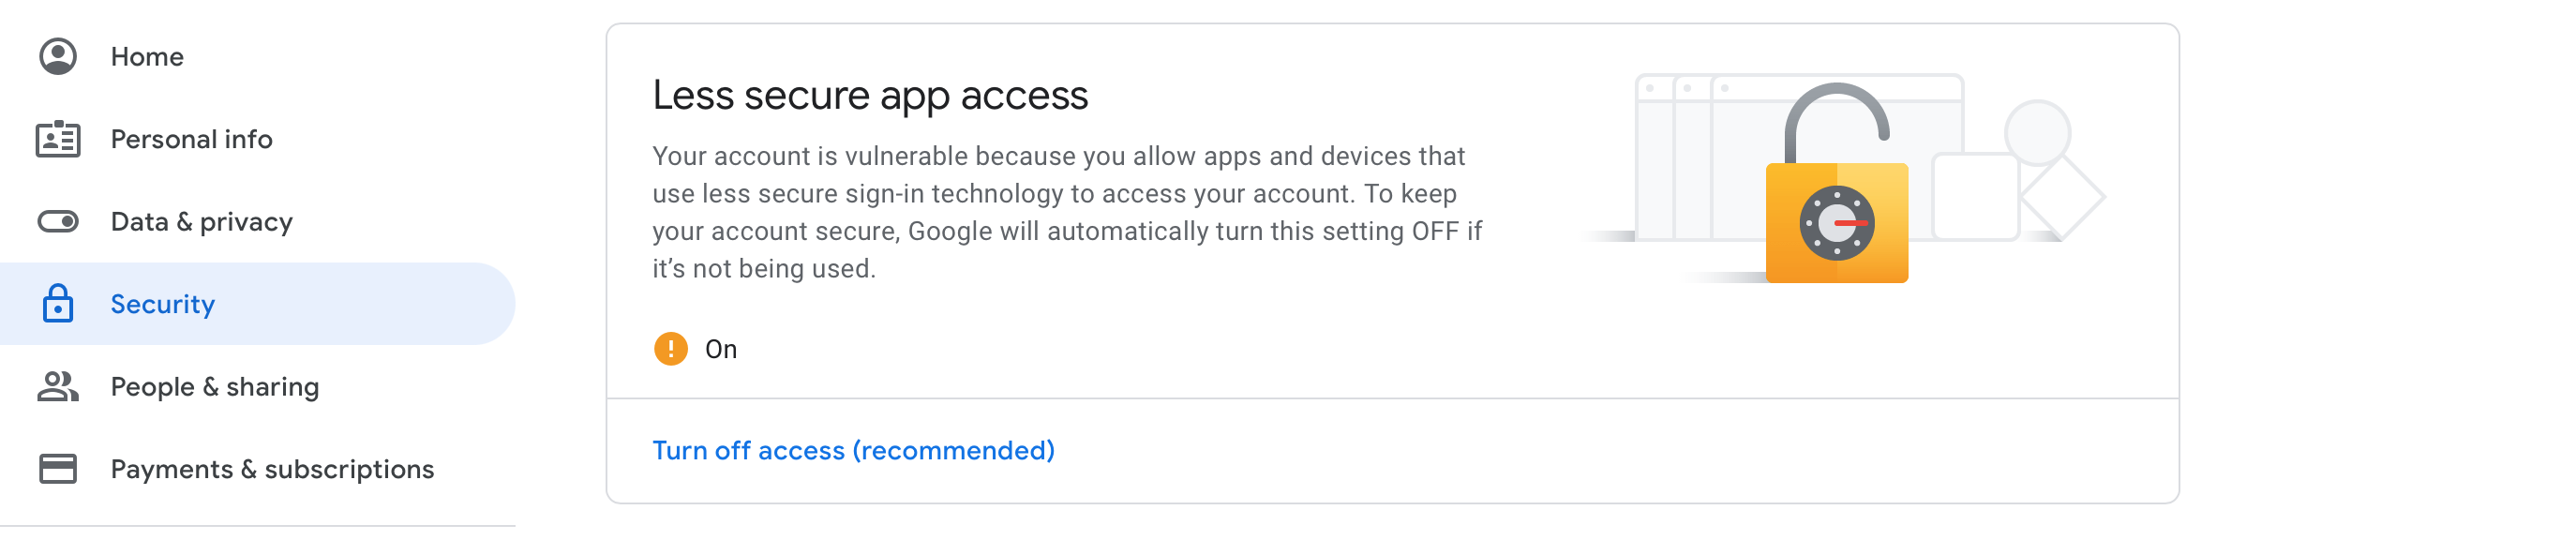 Security Settings Gmail Screenshot